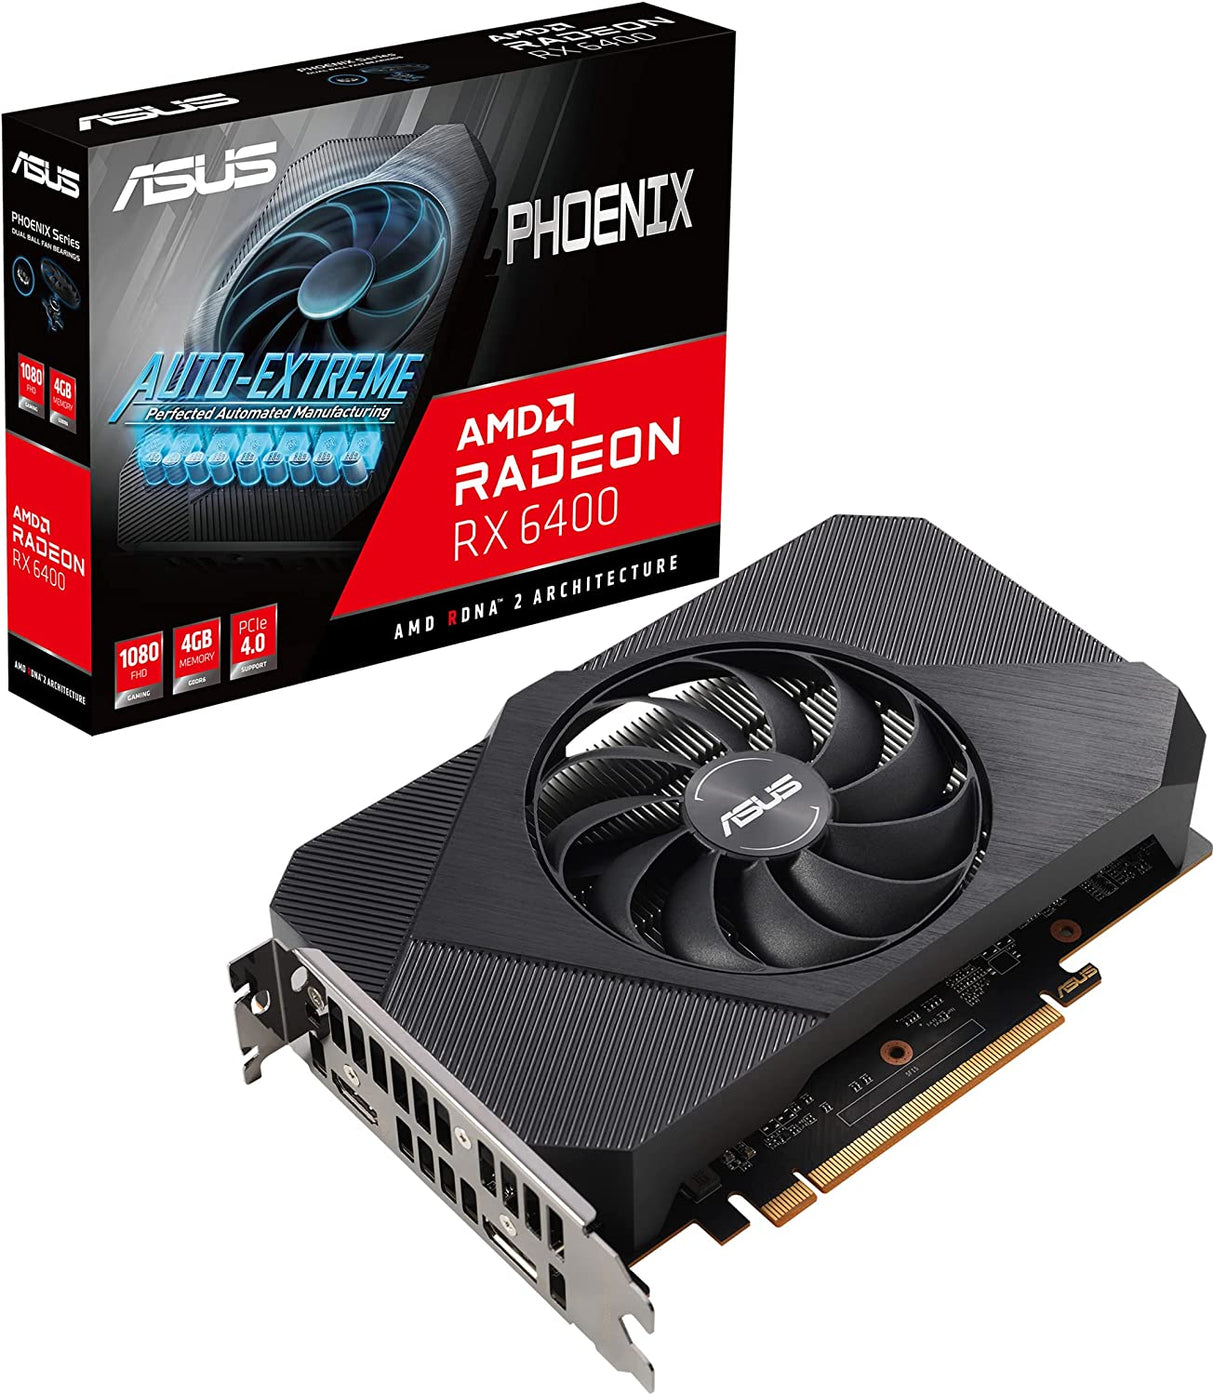 ASUS Phoenix AMD Radeon RX 6400 4GB GDDR6 Gaming Graphics Card (AMD RDNA 2, PCIe 4.0, 4GB GDDR6 Memory, HDMI 2.1, DisplayPort 1.4a, Axial-tech Fan Design, Dual Ball Fan Bearings)